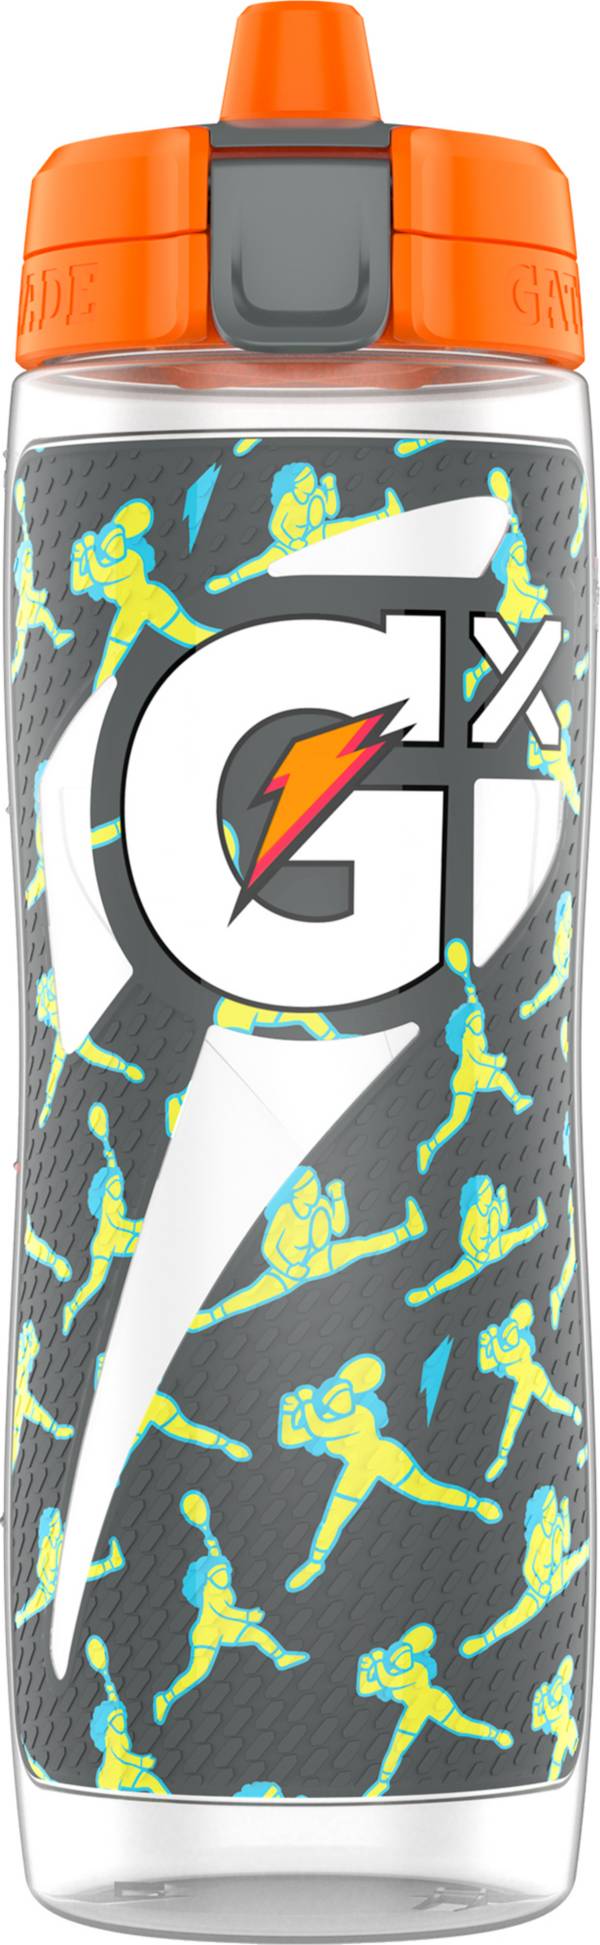 Gatorade Gx 30 oz. Bottle